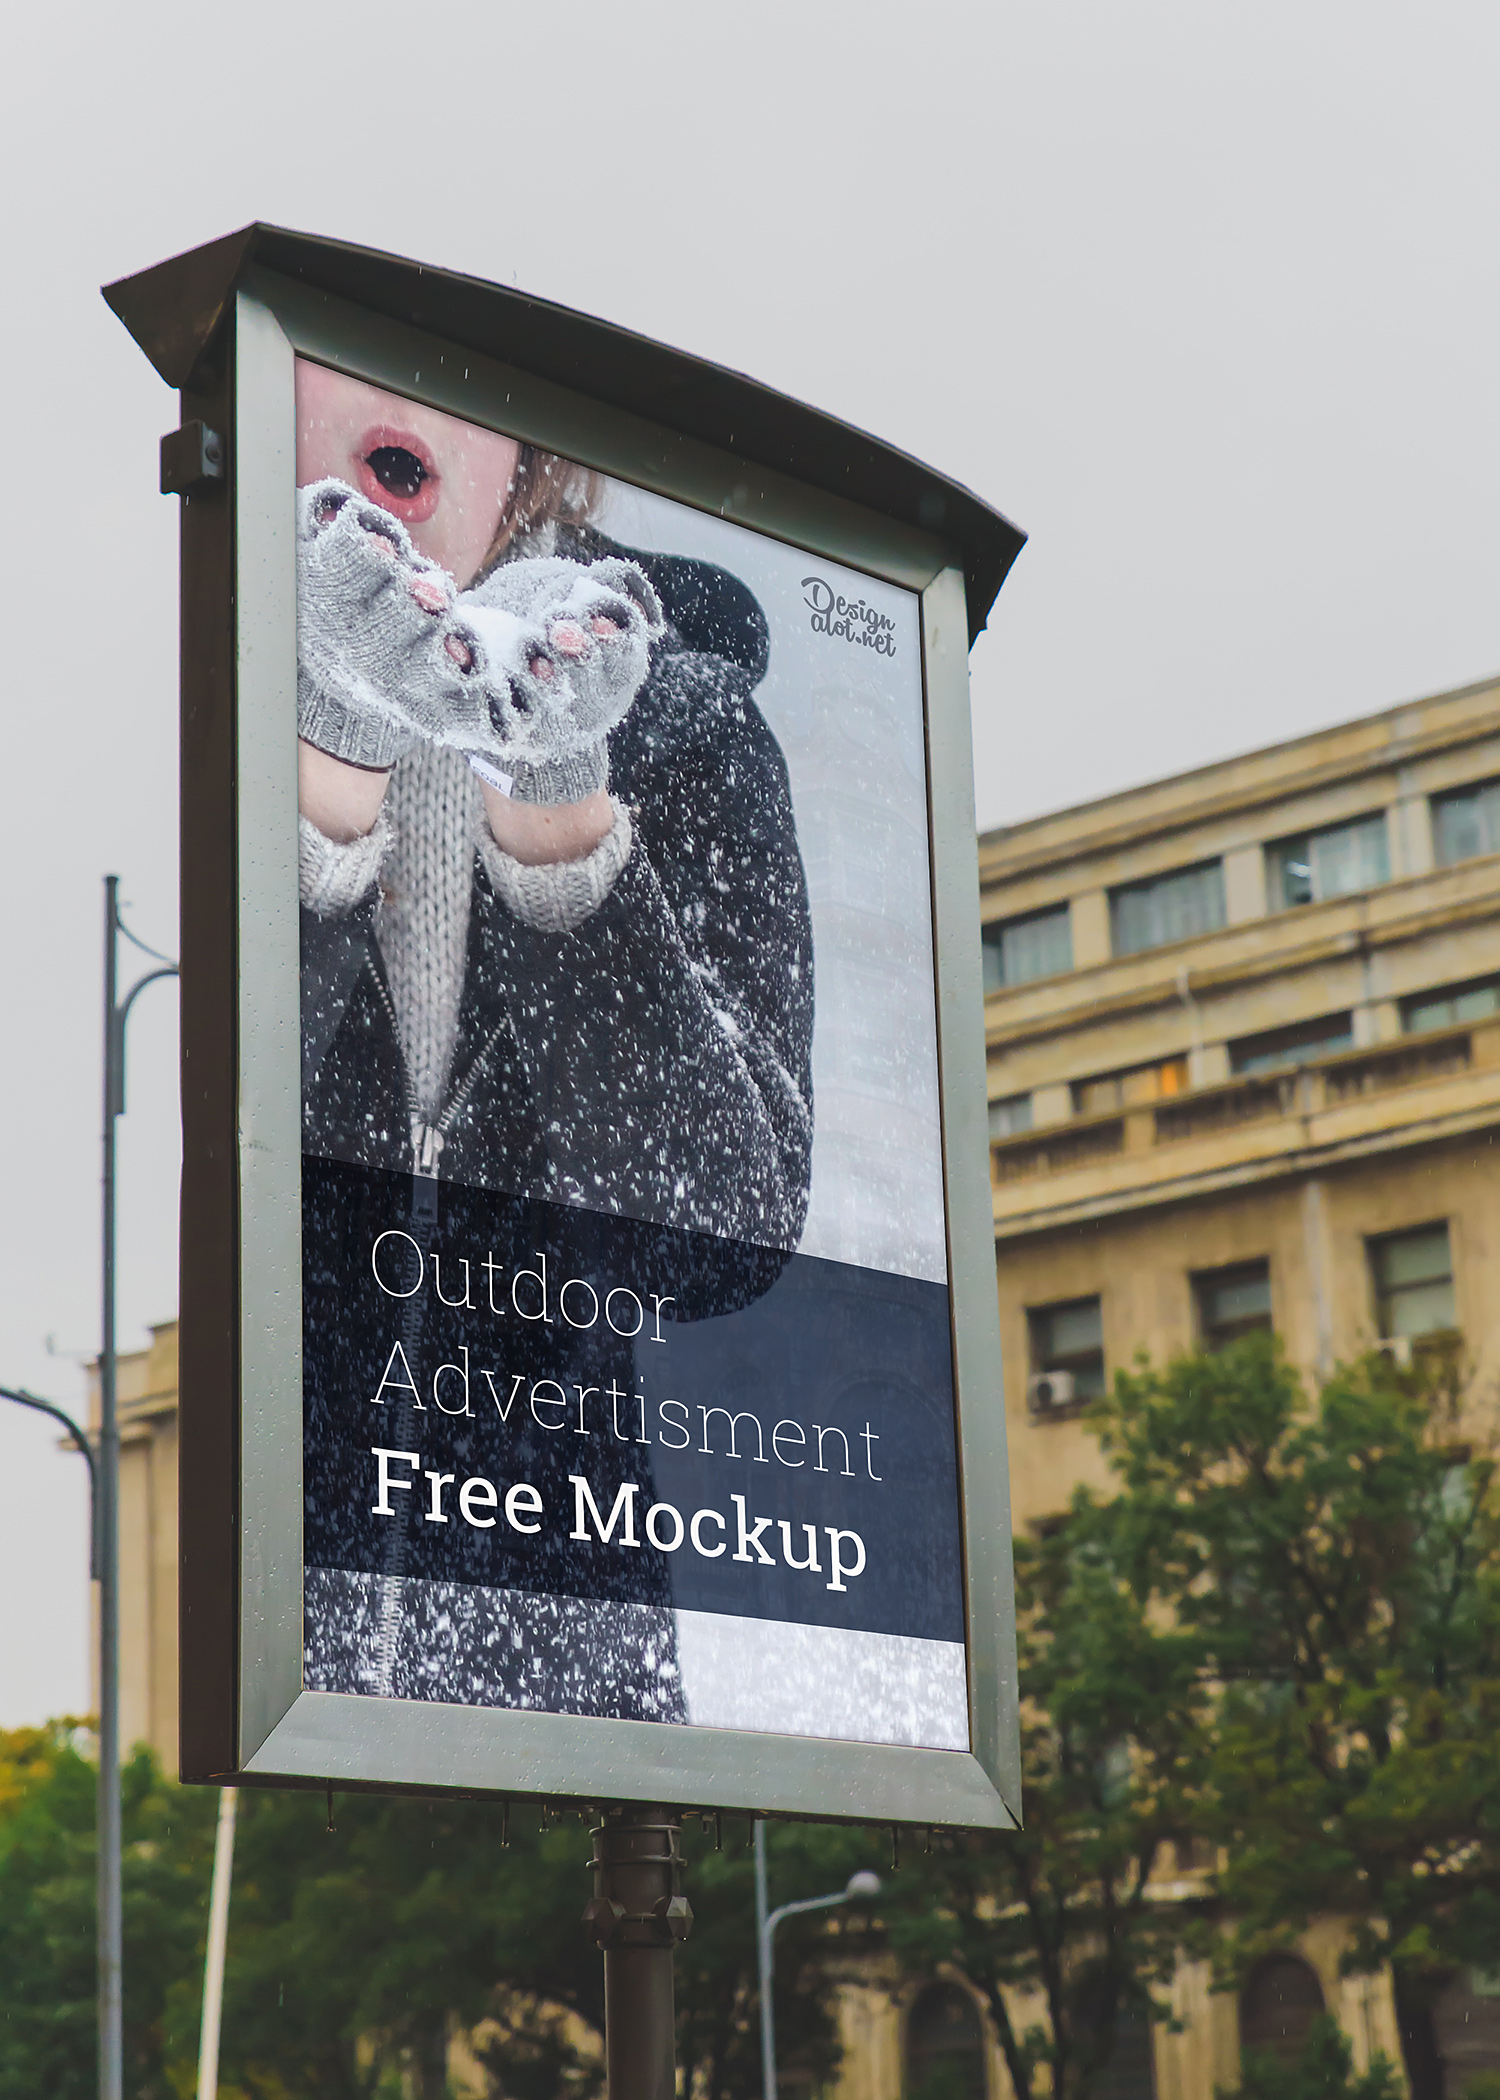 Outdoor Advertising Free Mockup | Free Mockup